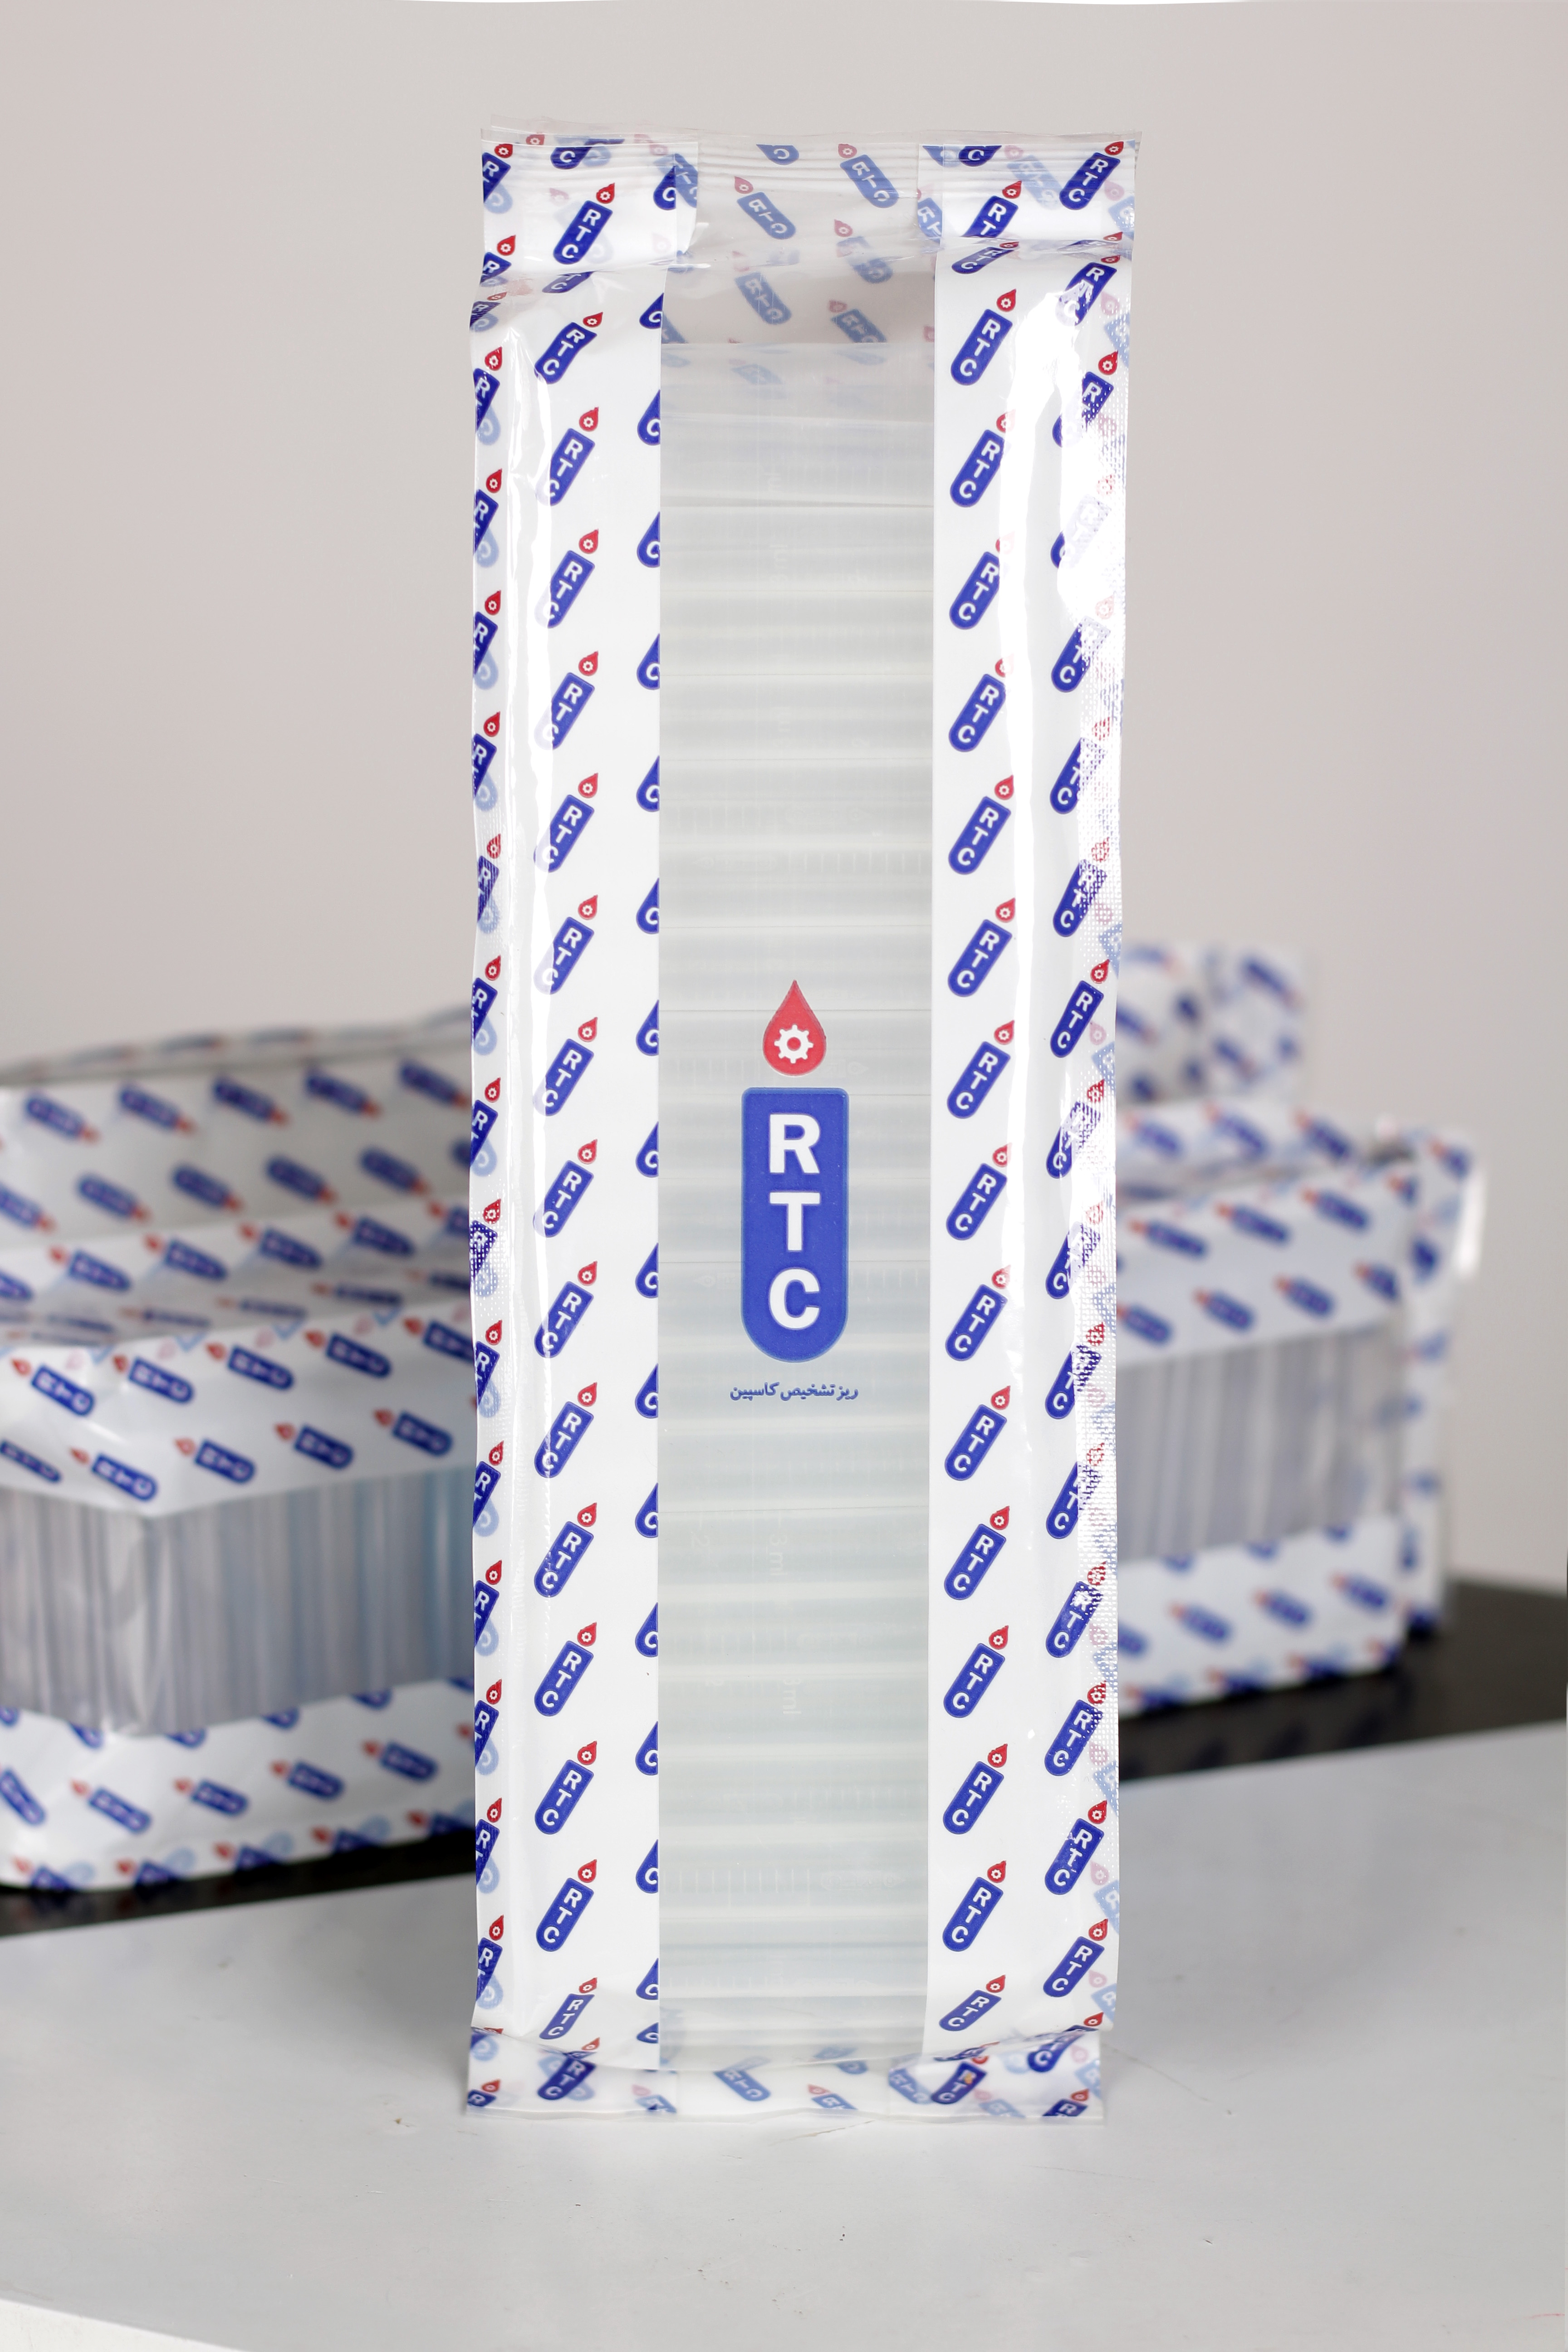 لوله خون گیری ساده  مدرج (مات) 13x75 - Simple Blood Collection Test Tubes PP-m 13x75 - RTC - مصرفی - نمونه گیری - ریز تشخیص کاسپین